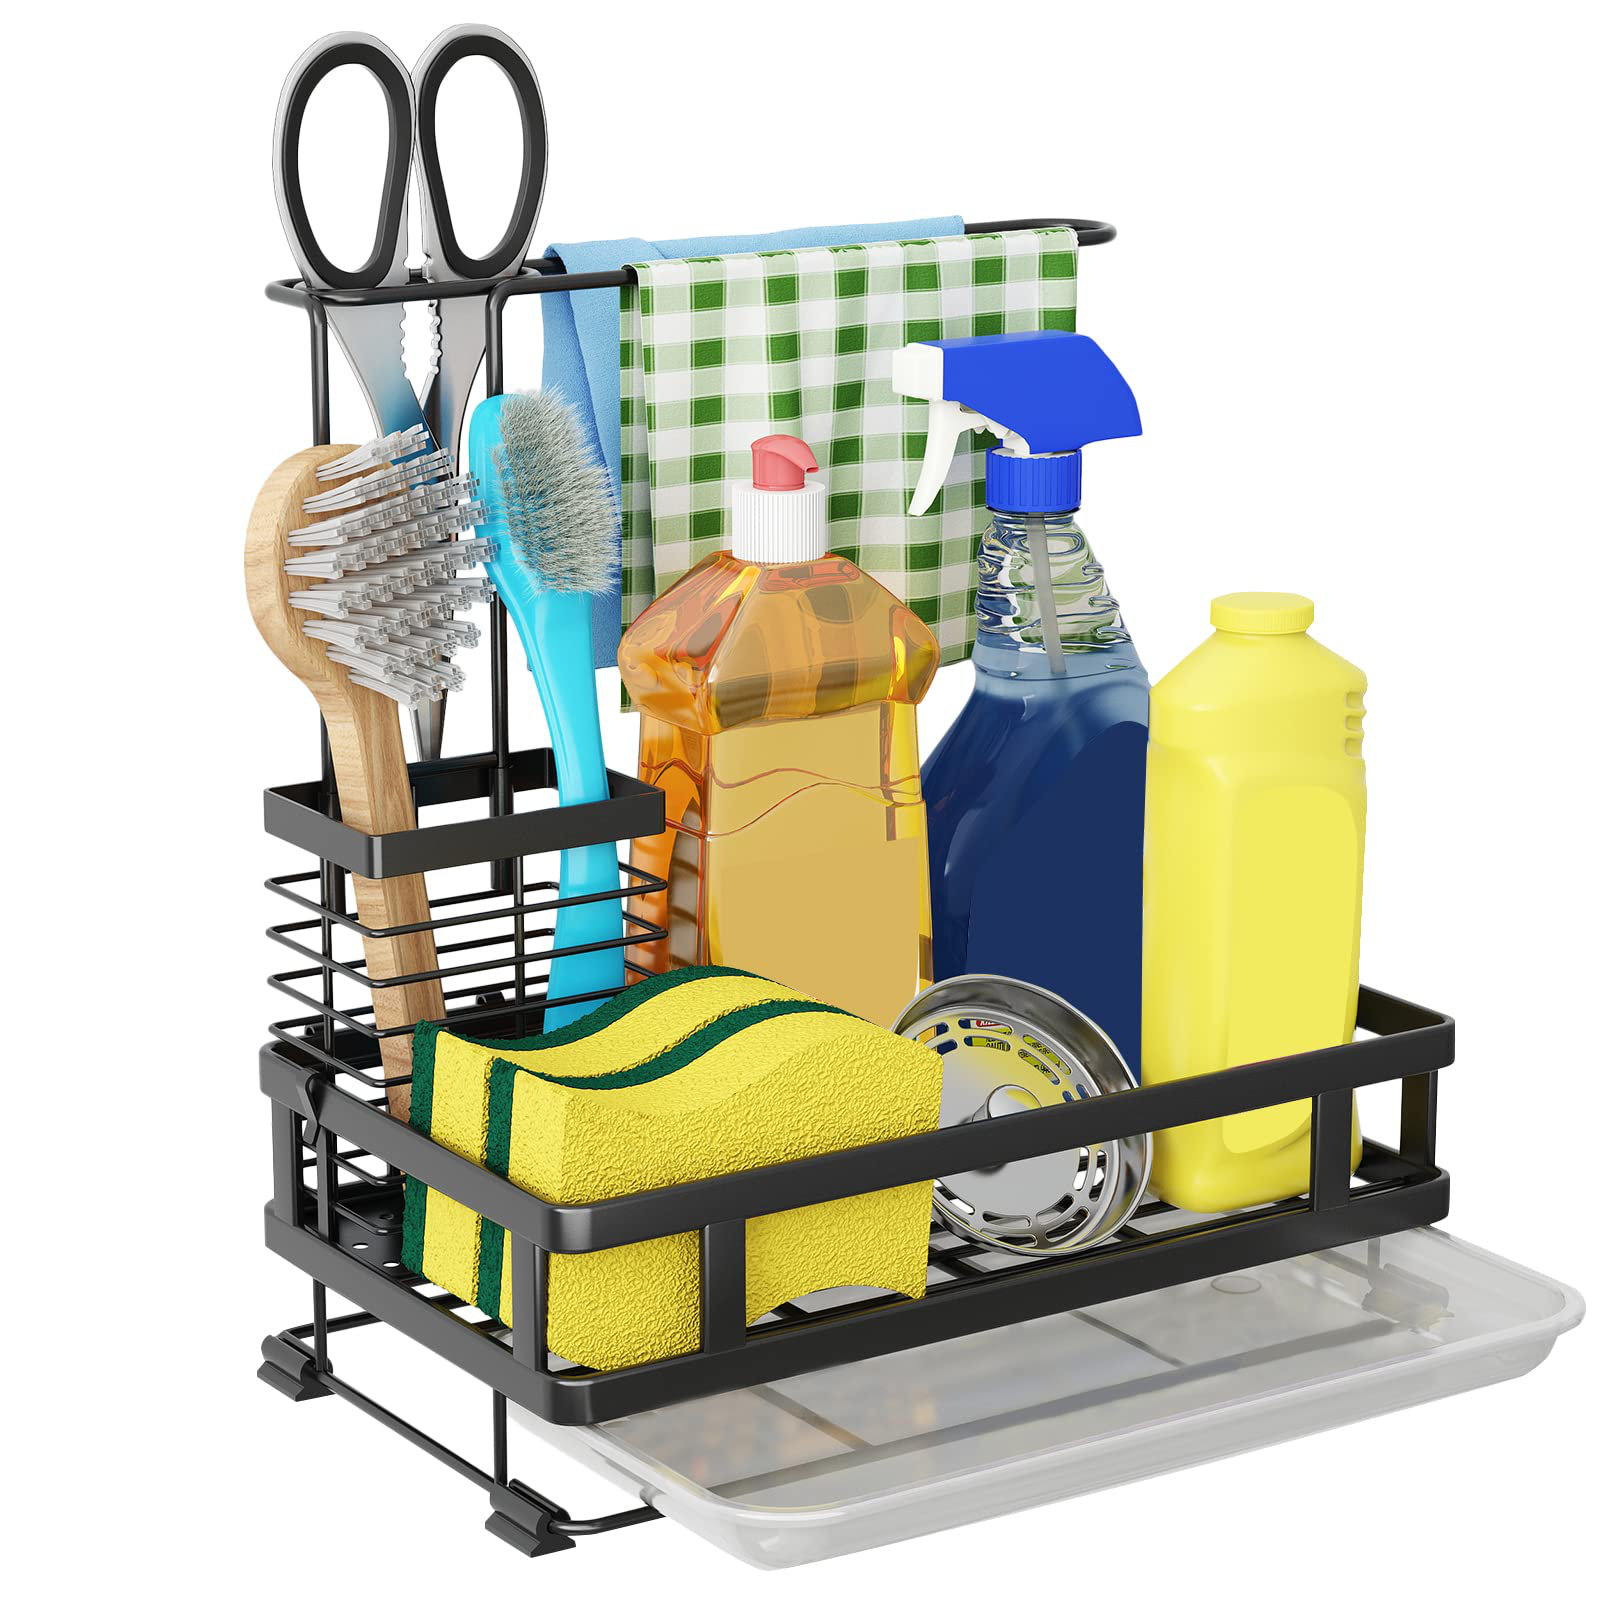 304 Stainless Steel Sponge Holder for Kitchen Sink Caddy Stand Drain Rack  Cleaning Brush Soap Organizer Storage Holder